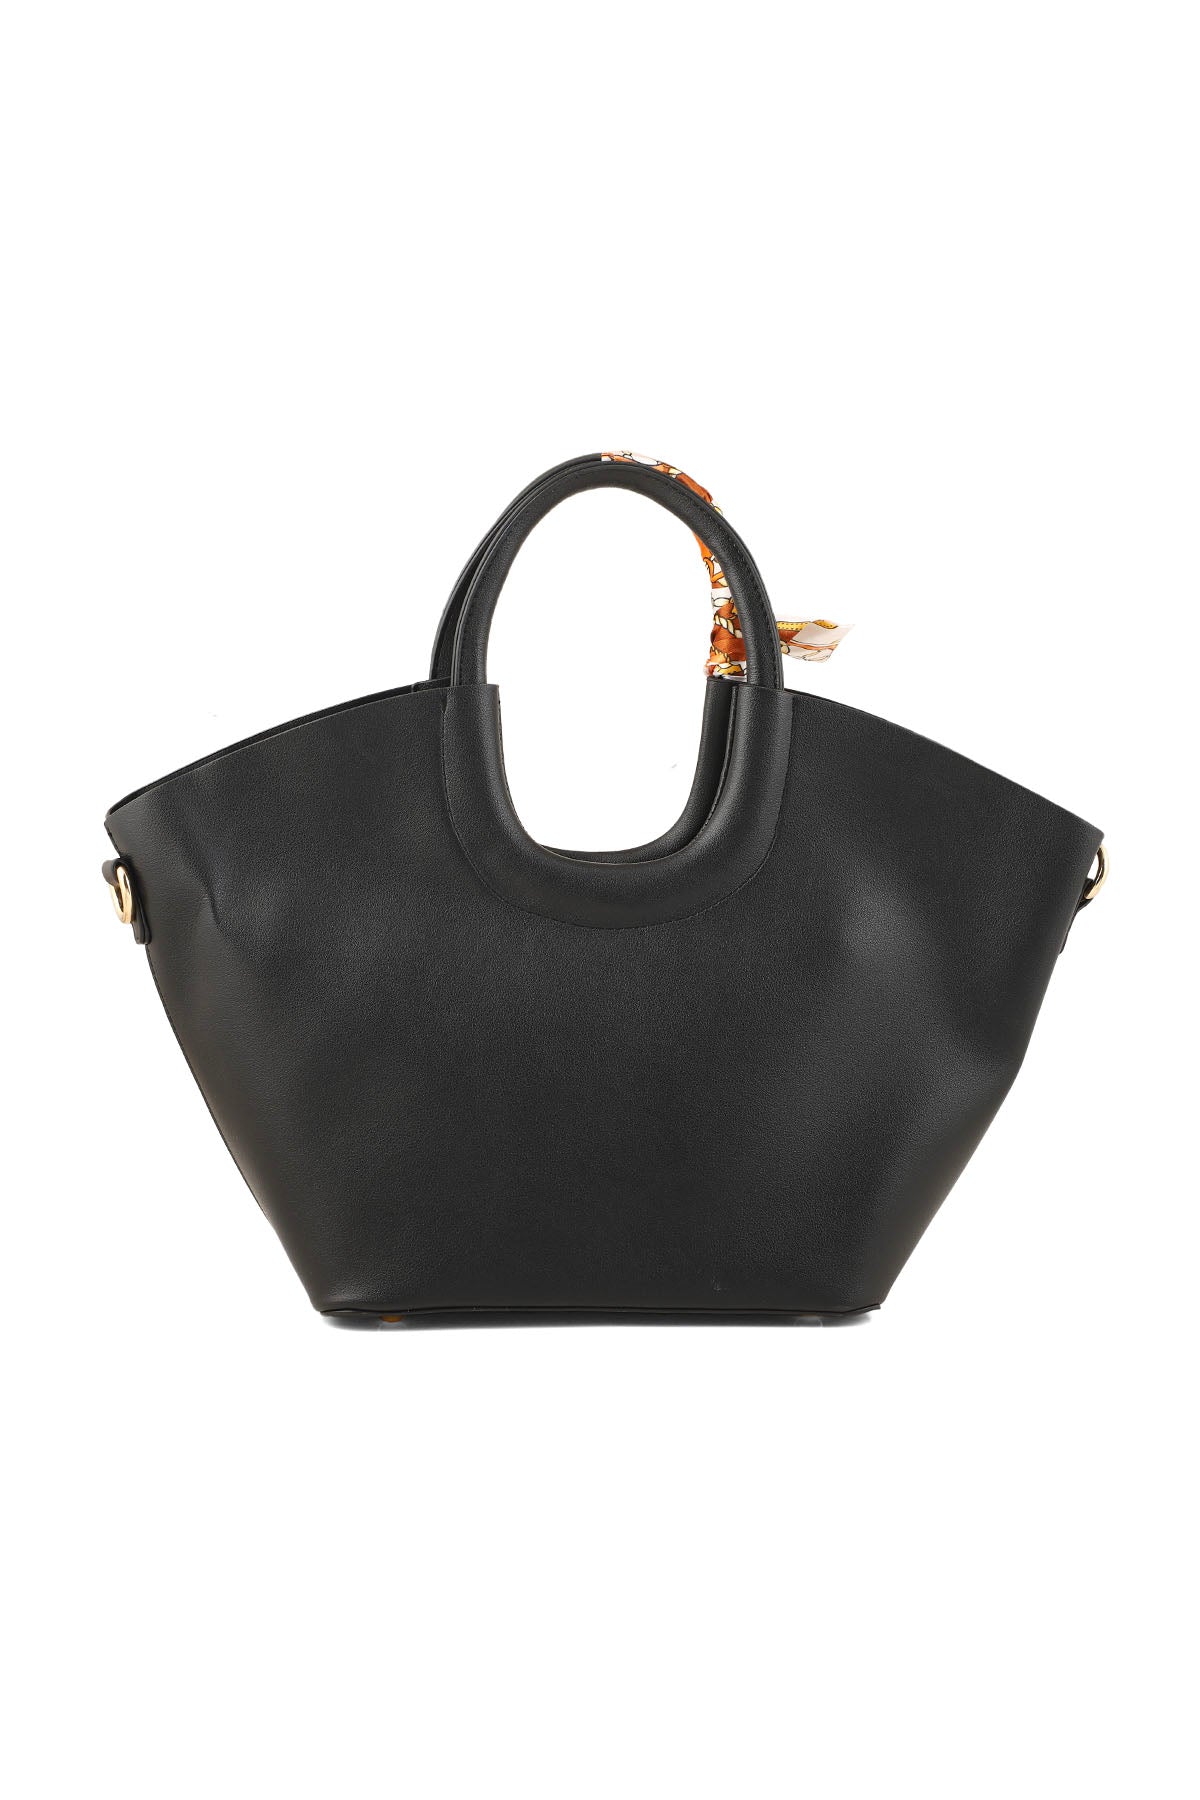 Hobo Hand Bags B15136-Black